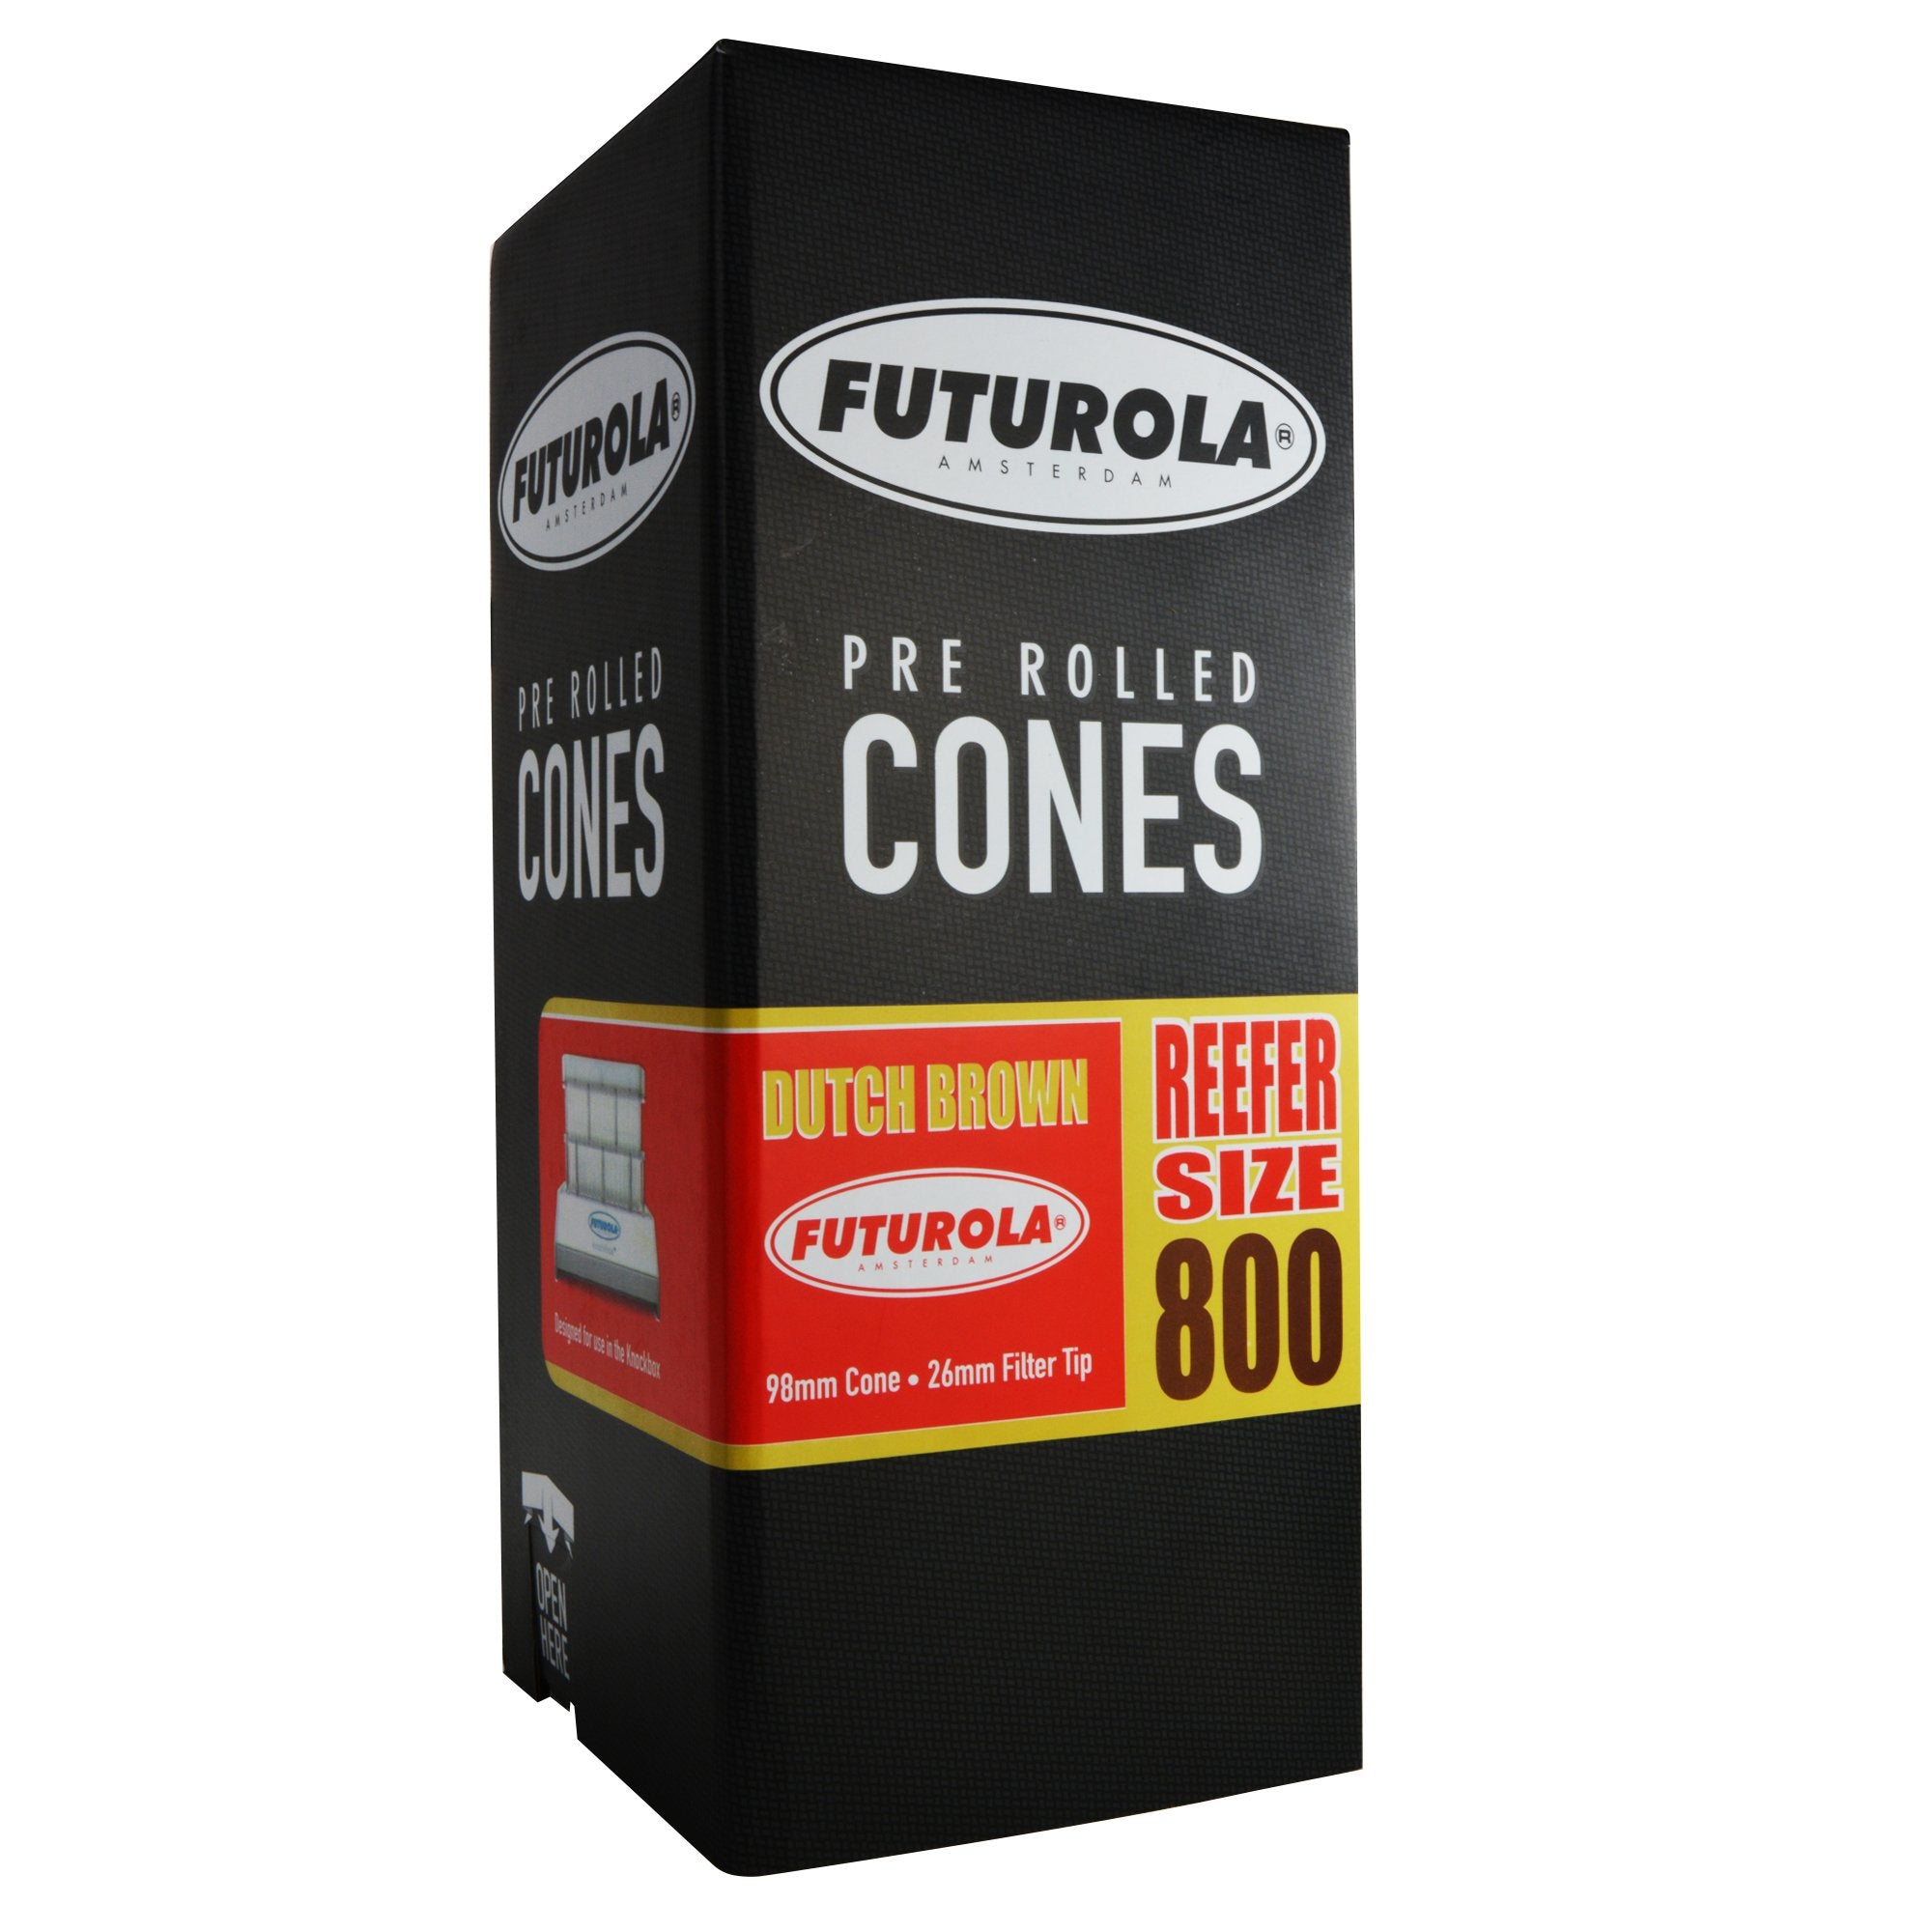 FUTUROLA | Reefer Size Pre-Rolled Cones | 98mm - Dutch Brown Paper - 800 Count - 1